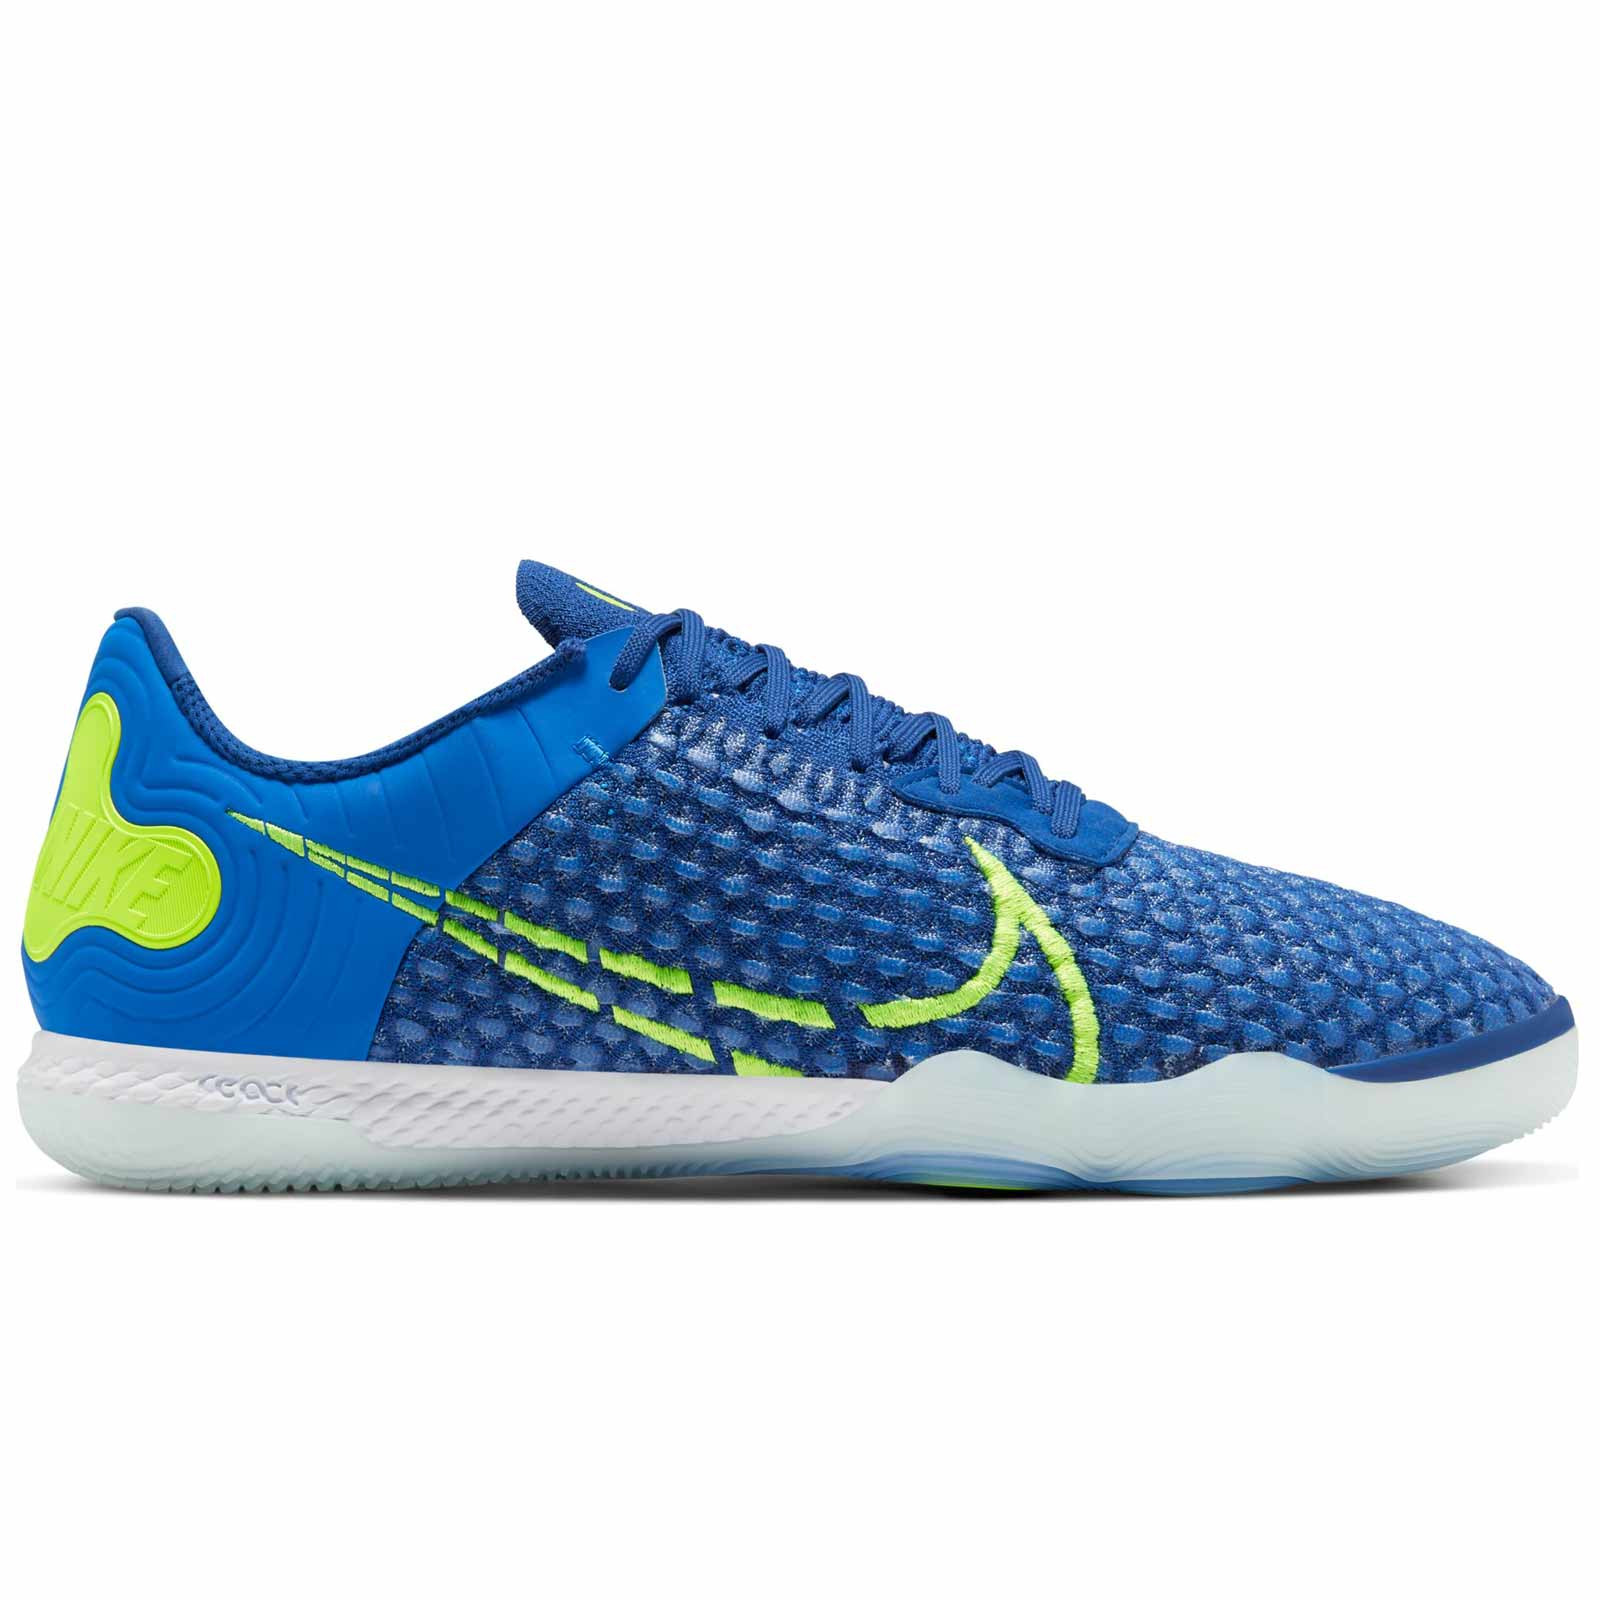 Zapatillas futsal Nike React azules |